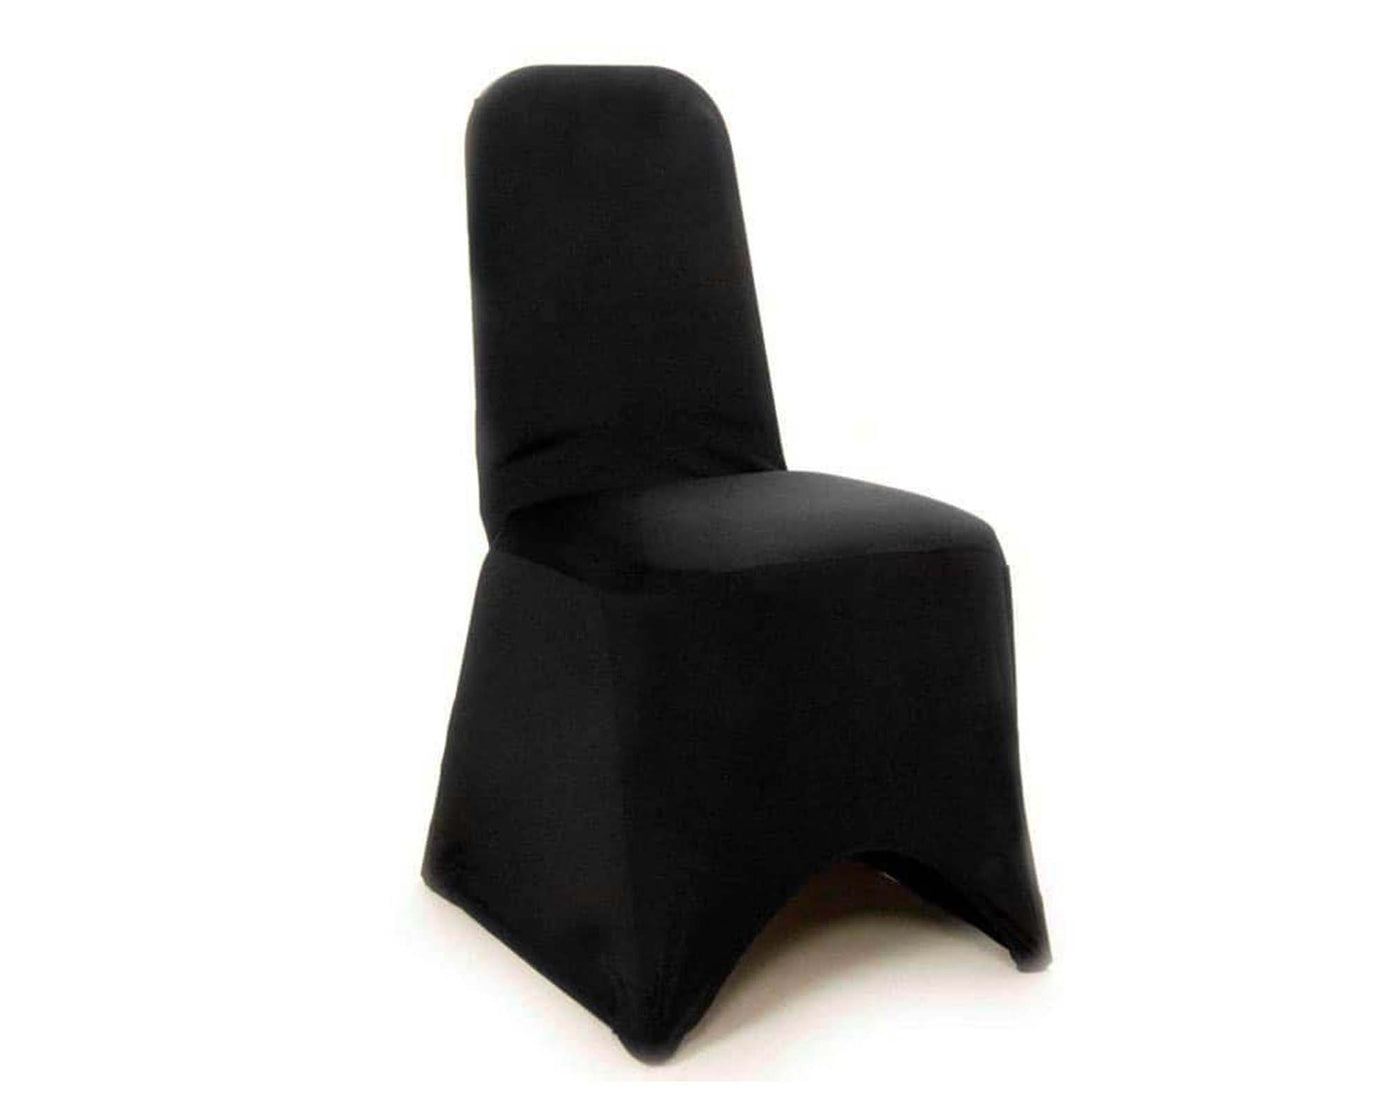 Black spandex chair cover